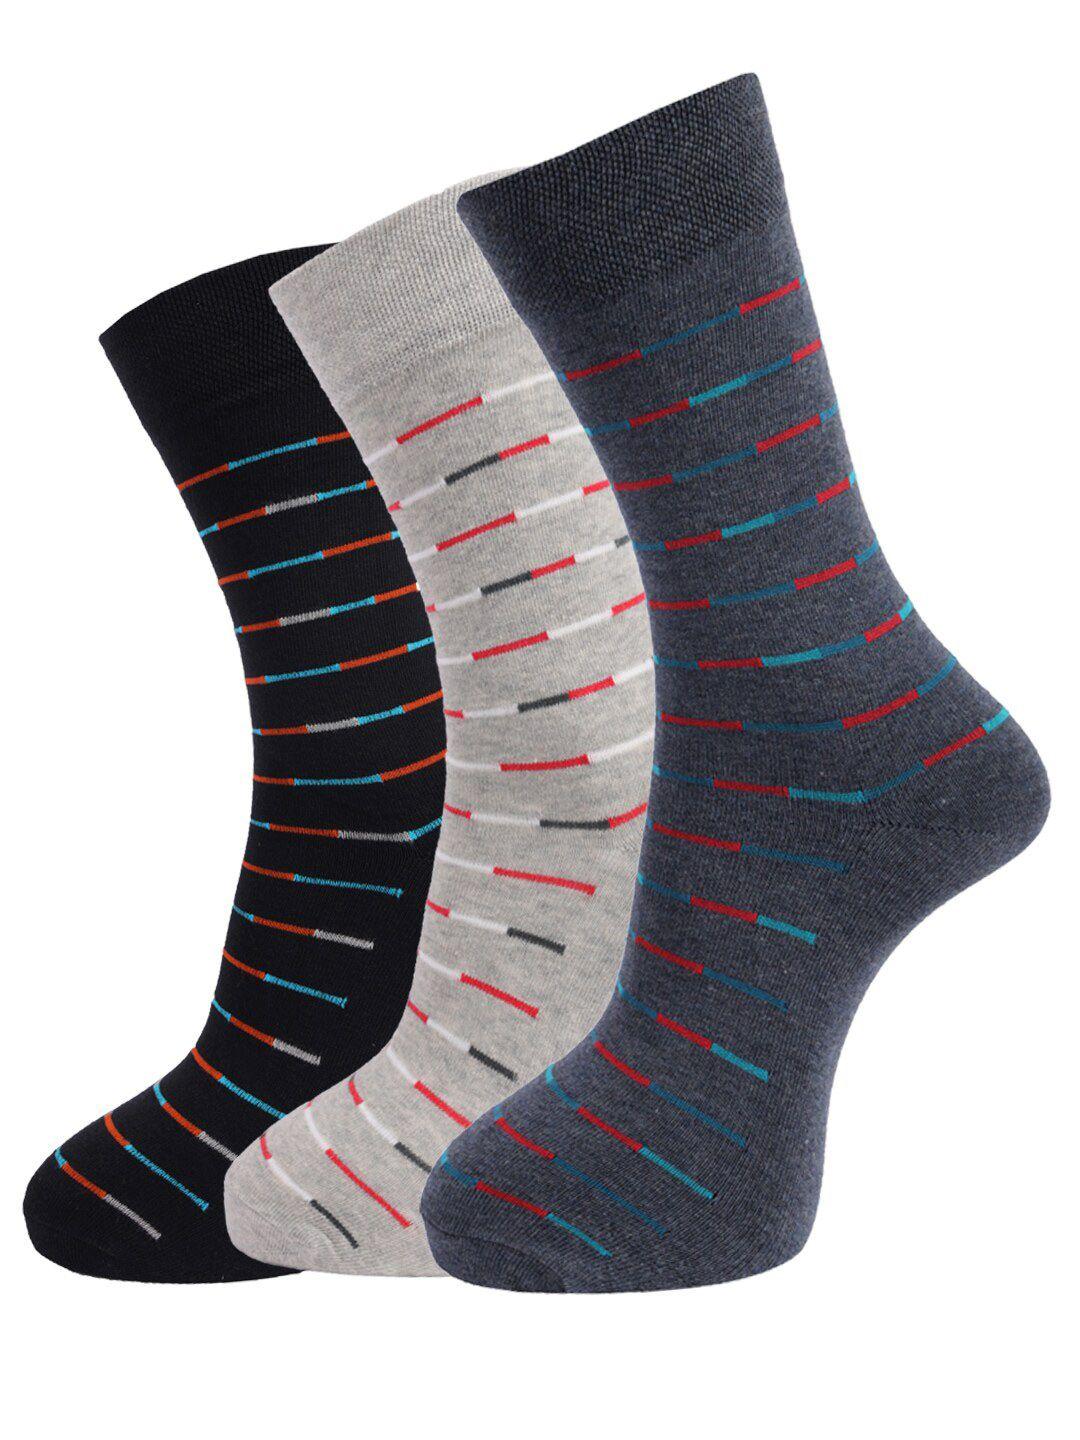 dollar-socks-men-set-of-3-assorted-&-printed-pure-cotton-above-ankle-socks